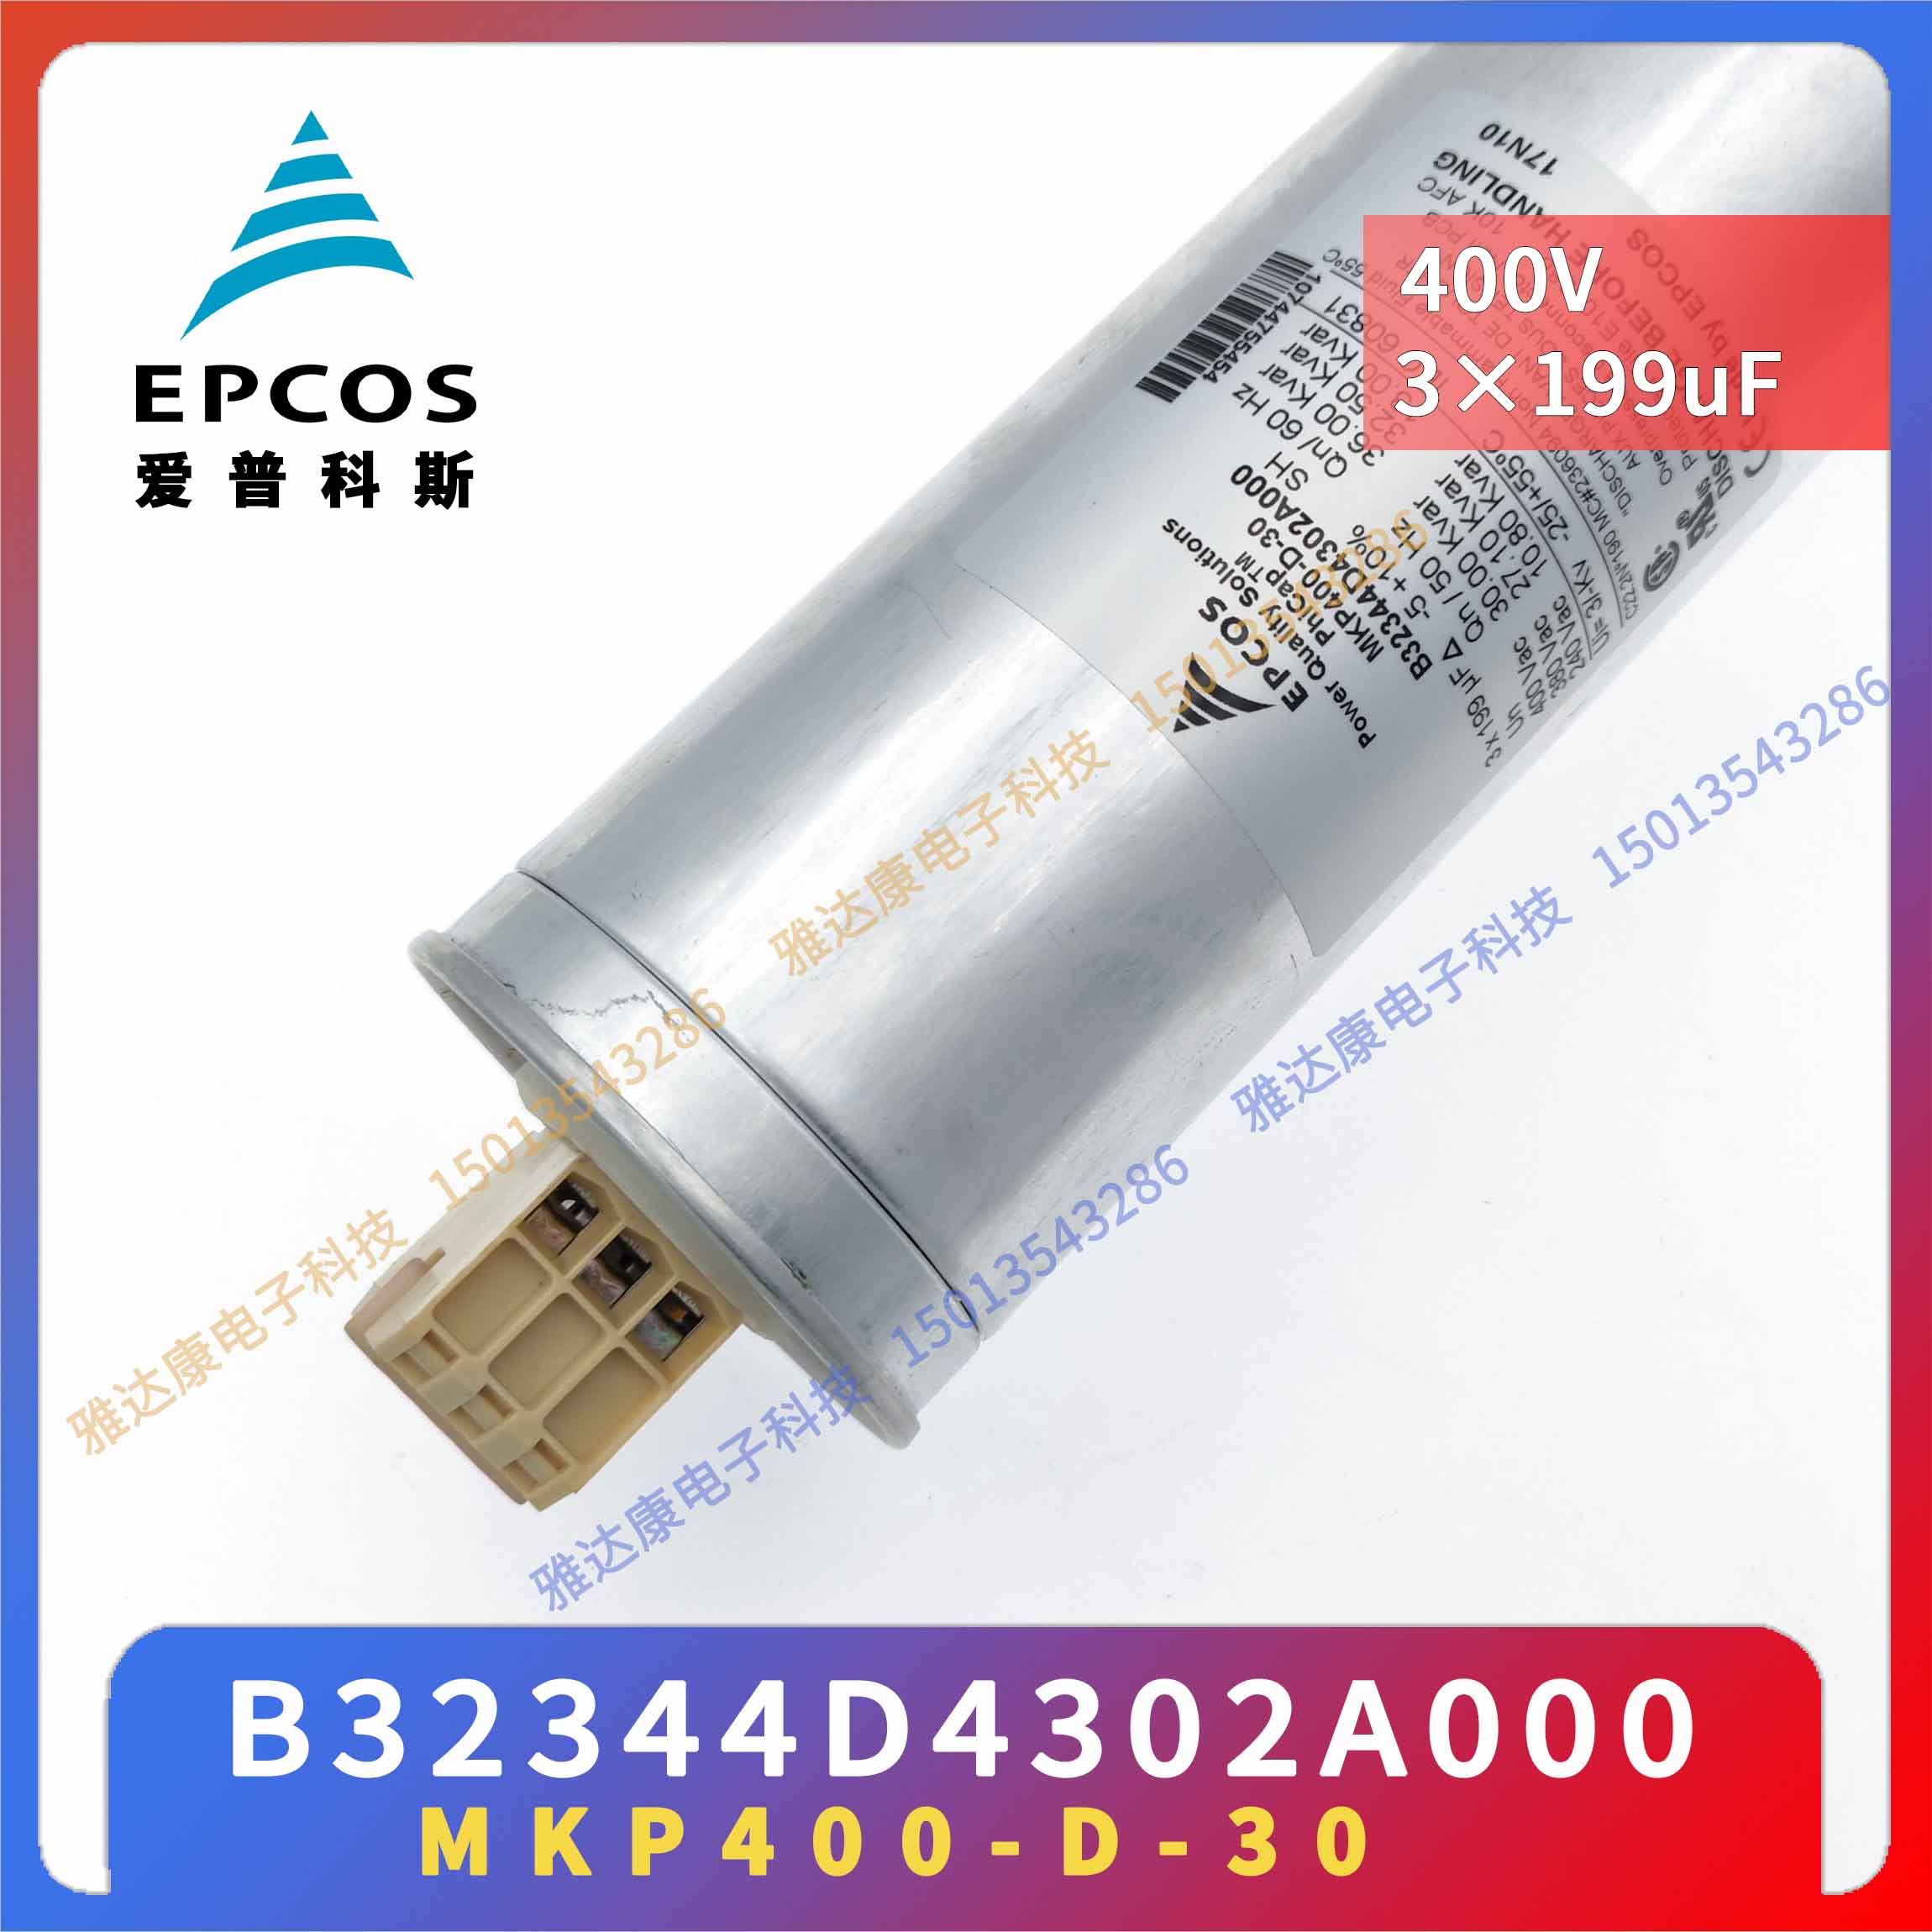 EPCOS电容器优势供应薄膜电容器B25667C5147A375 MKK525-D-12.5-01图片